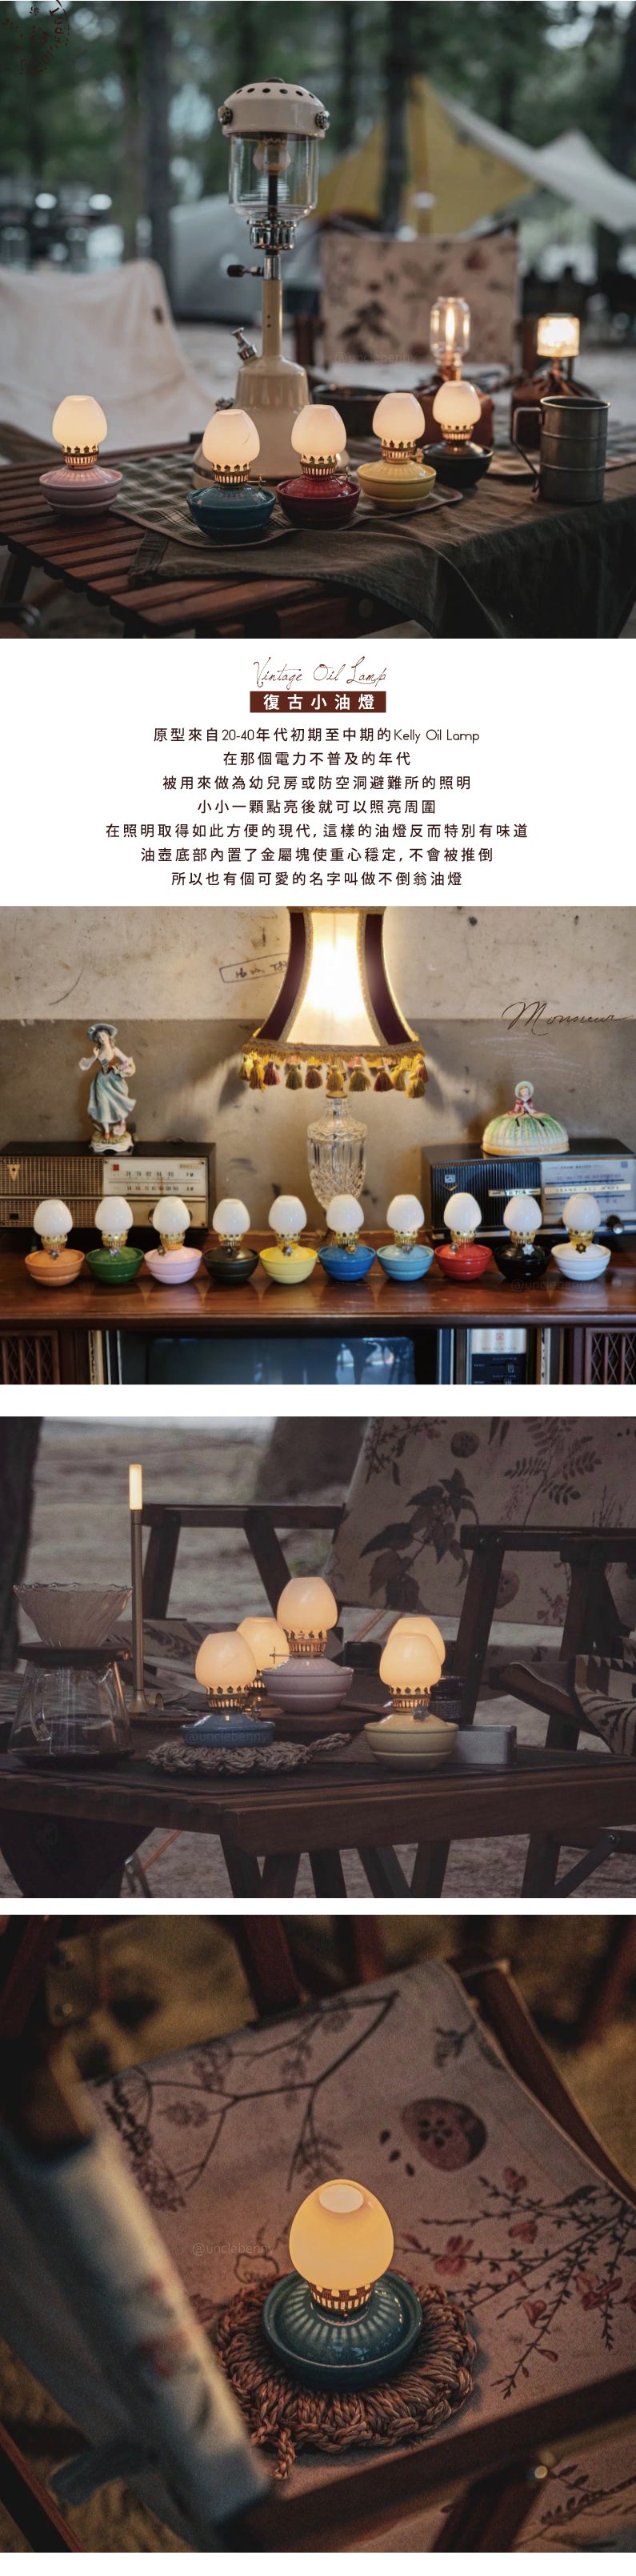 Vintage Oil Lamp • 復古小油燈 - 全系列⓭色懷舊登場 KELLY LAMP